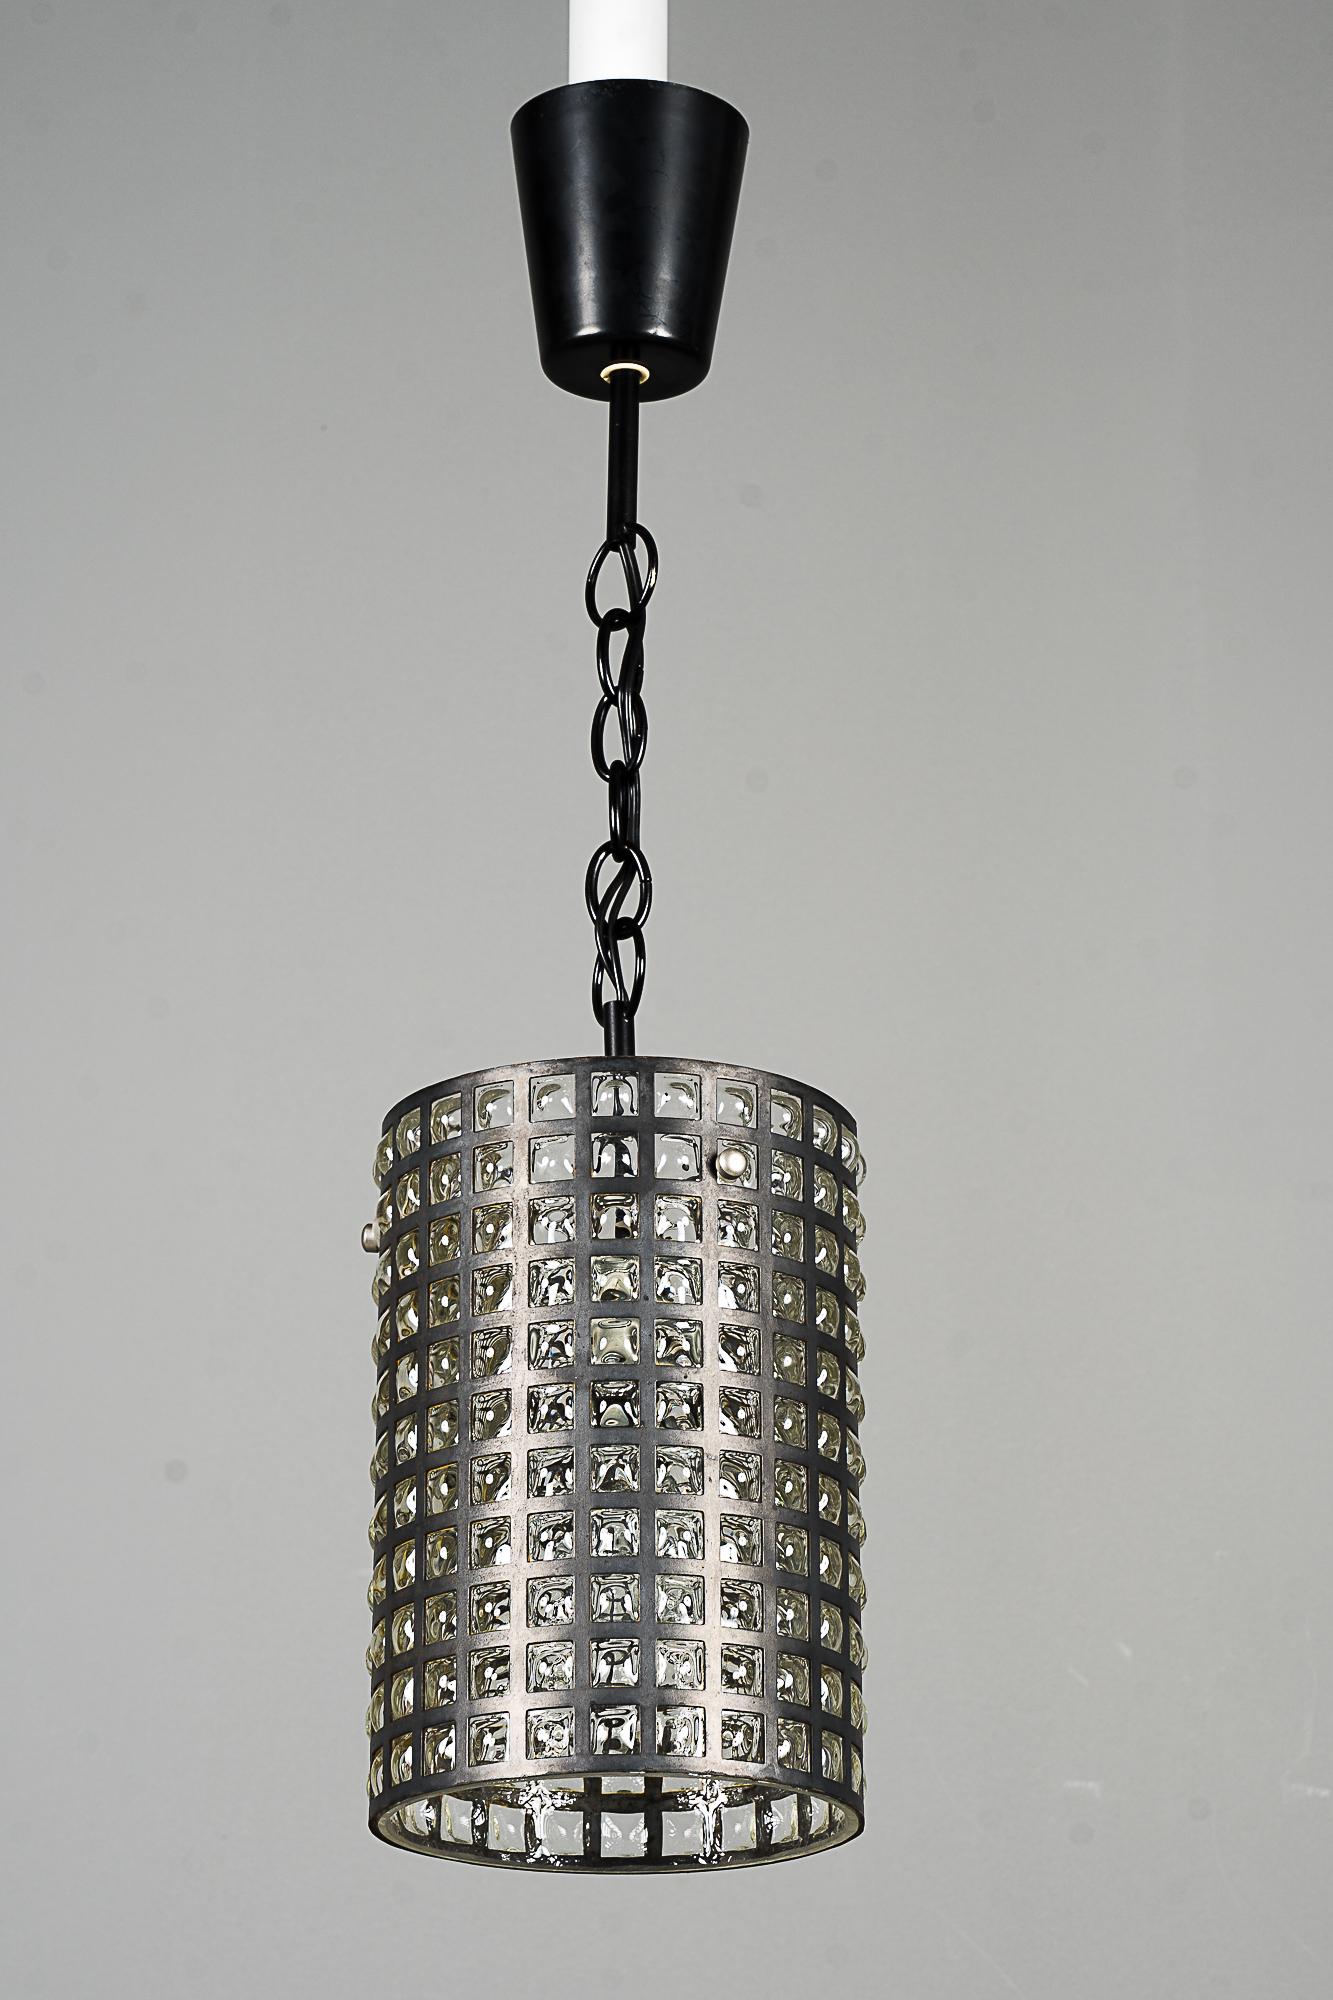 Rupert nikoll pendant, Vienna, 1960s.
Painted metal and glass
Original condition.